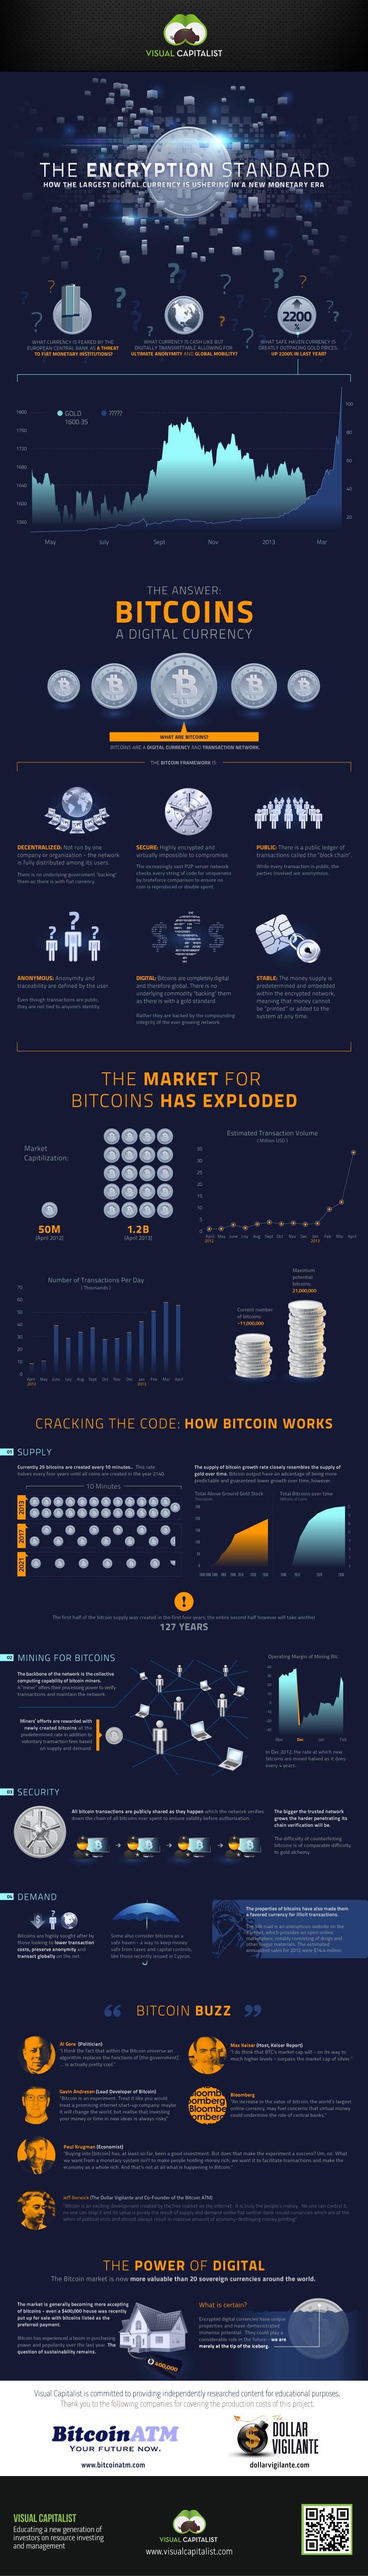 Bitcoin infography